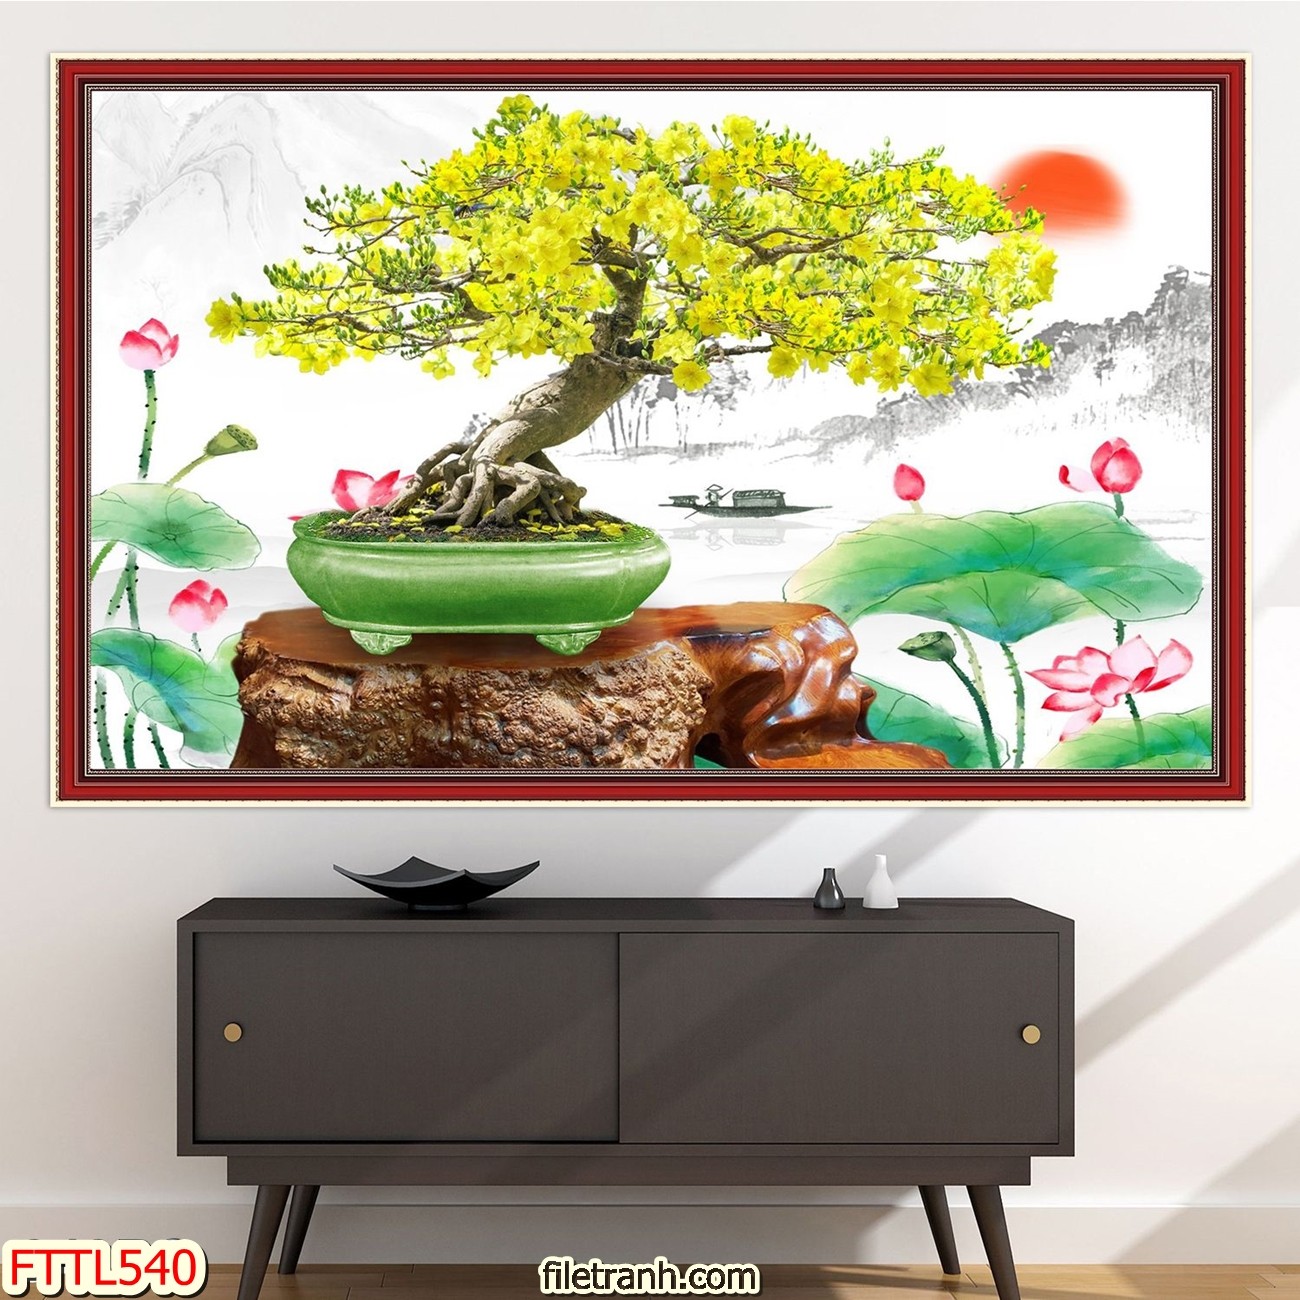 https://filetranh.com/file-tranh-chau-mai-bonsai/file-tranh-chau-mai-bonsai-fttl540.html